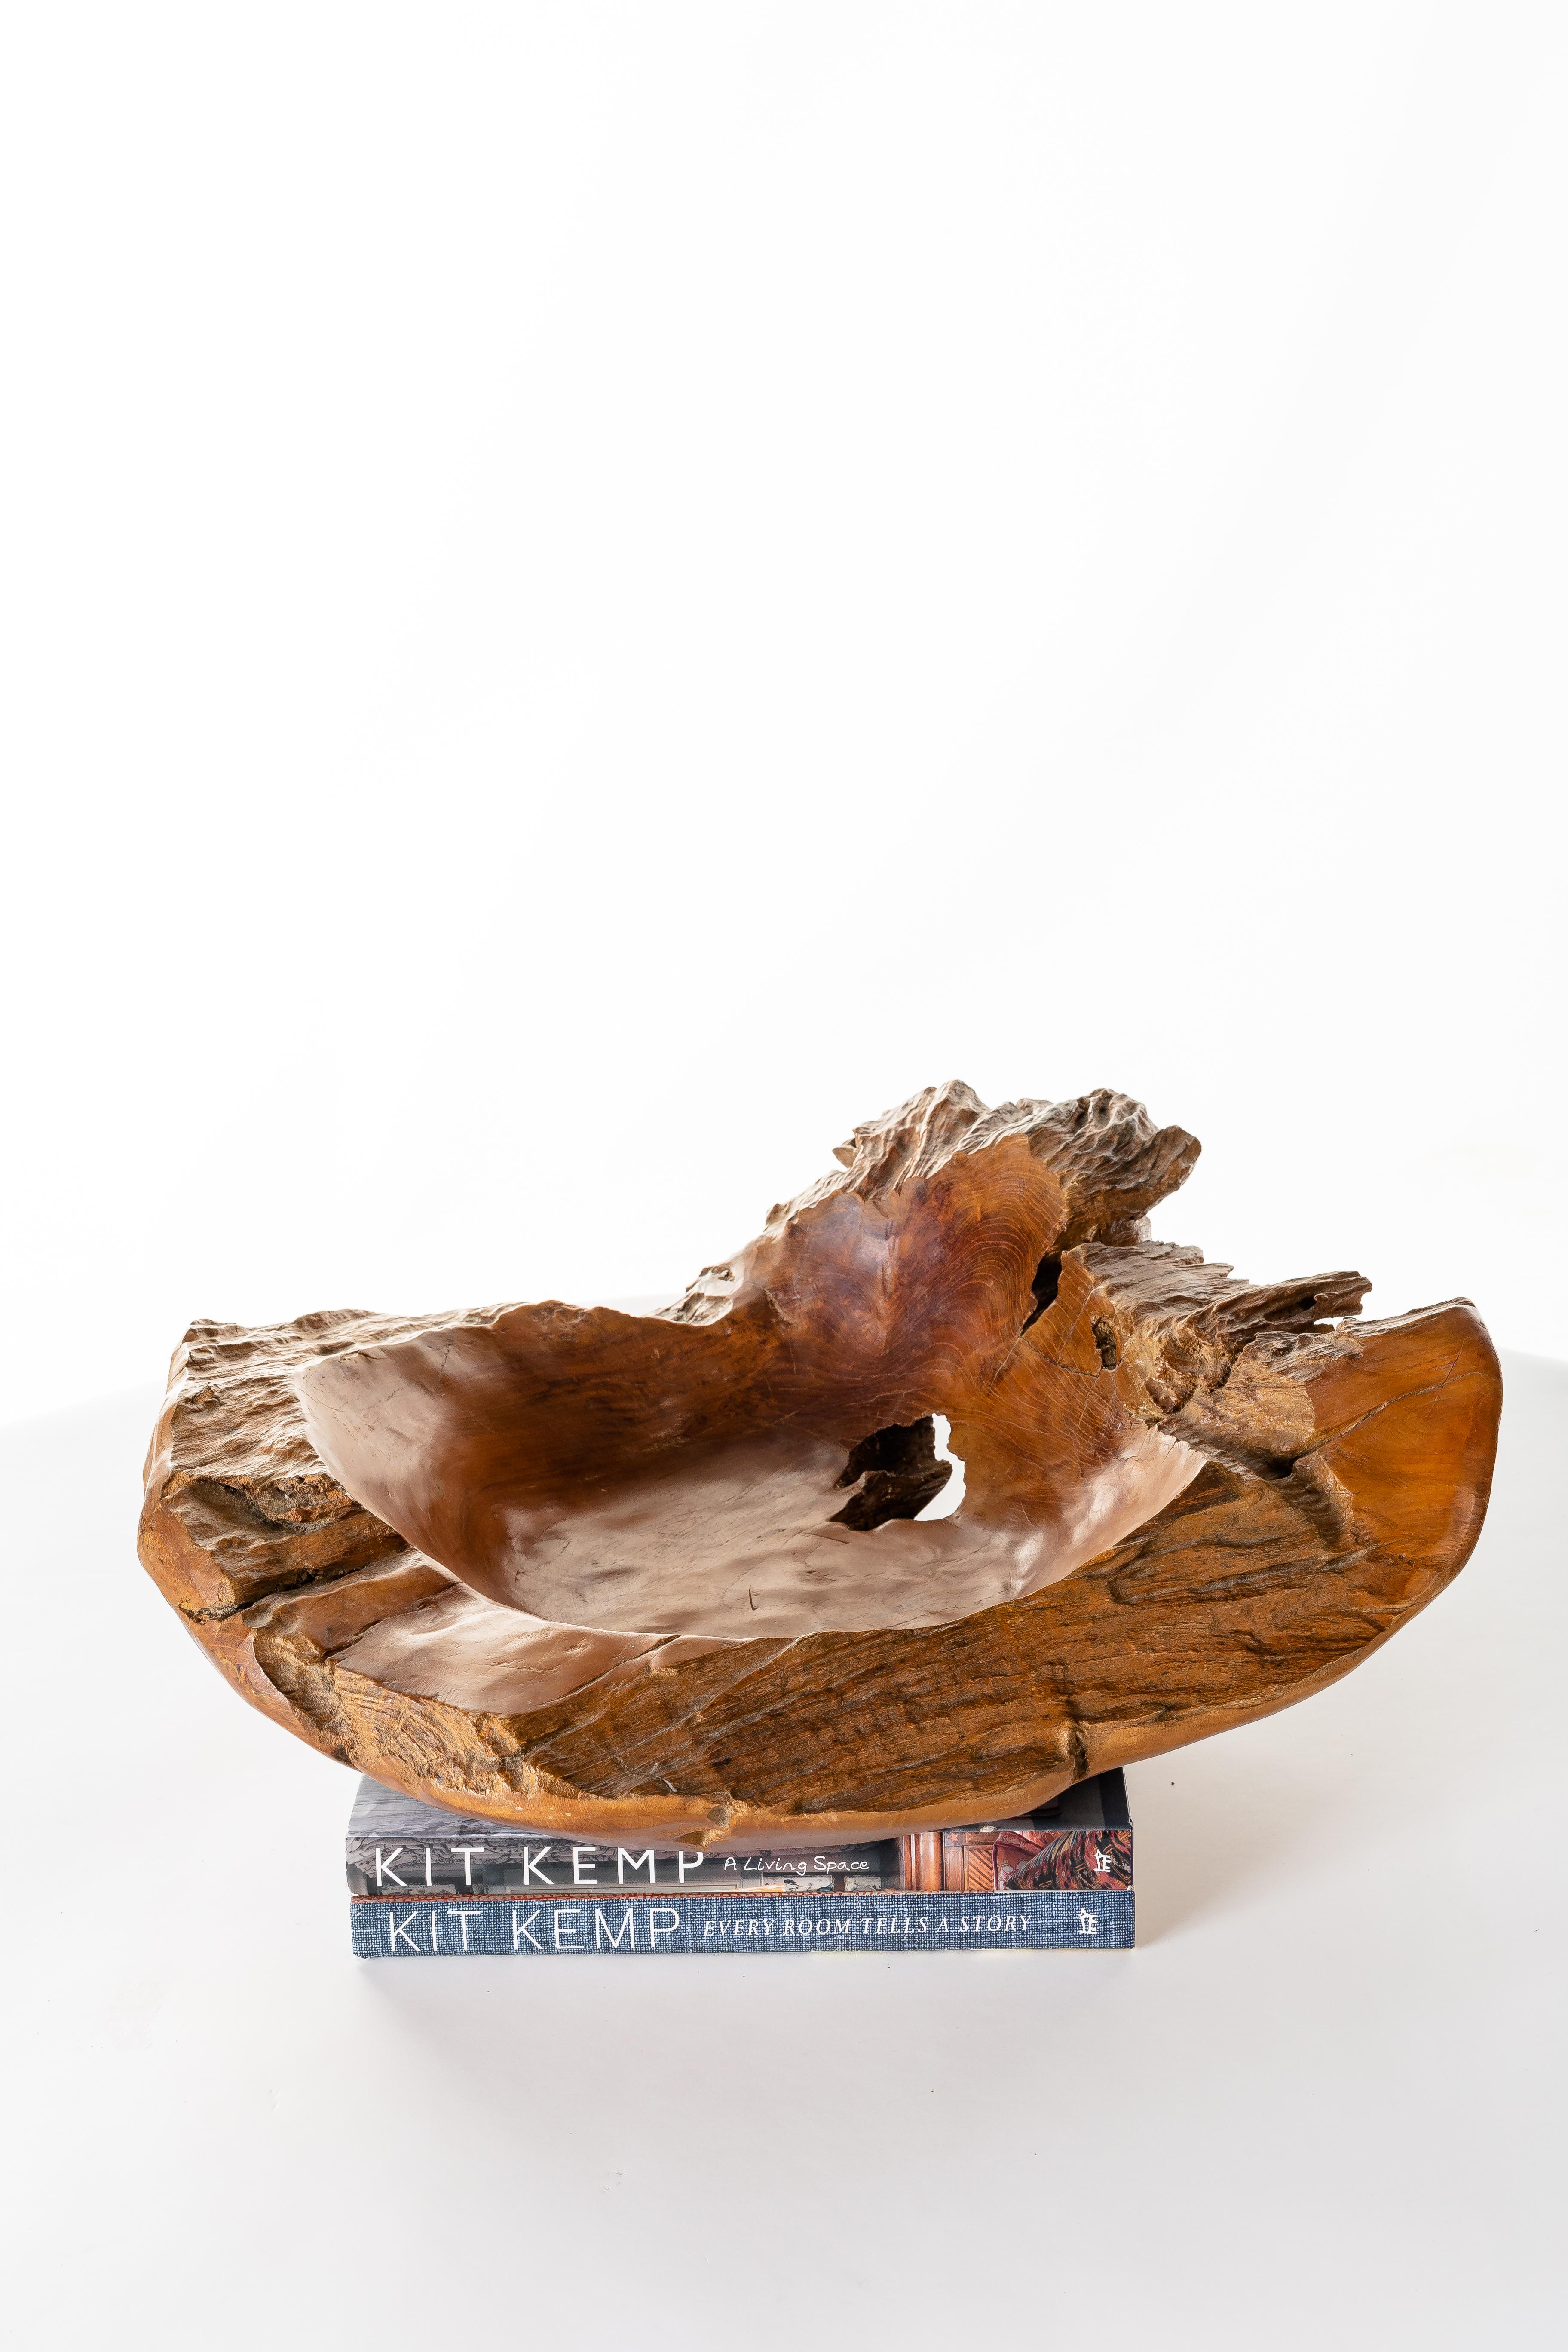 Decorative organic edge carved root wood bowl.